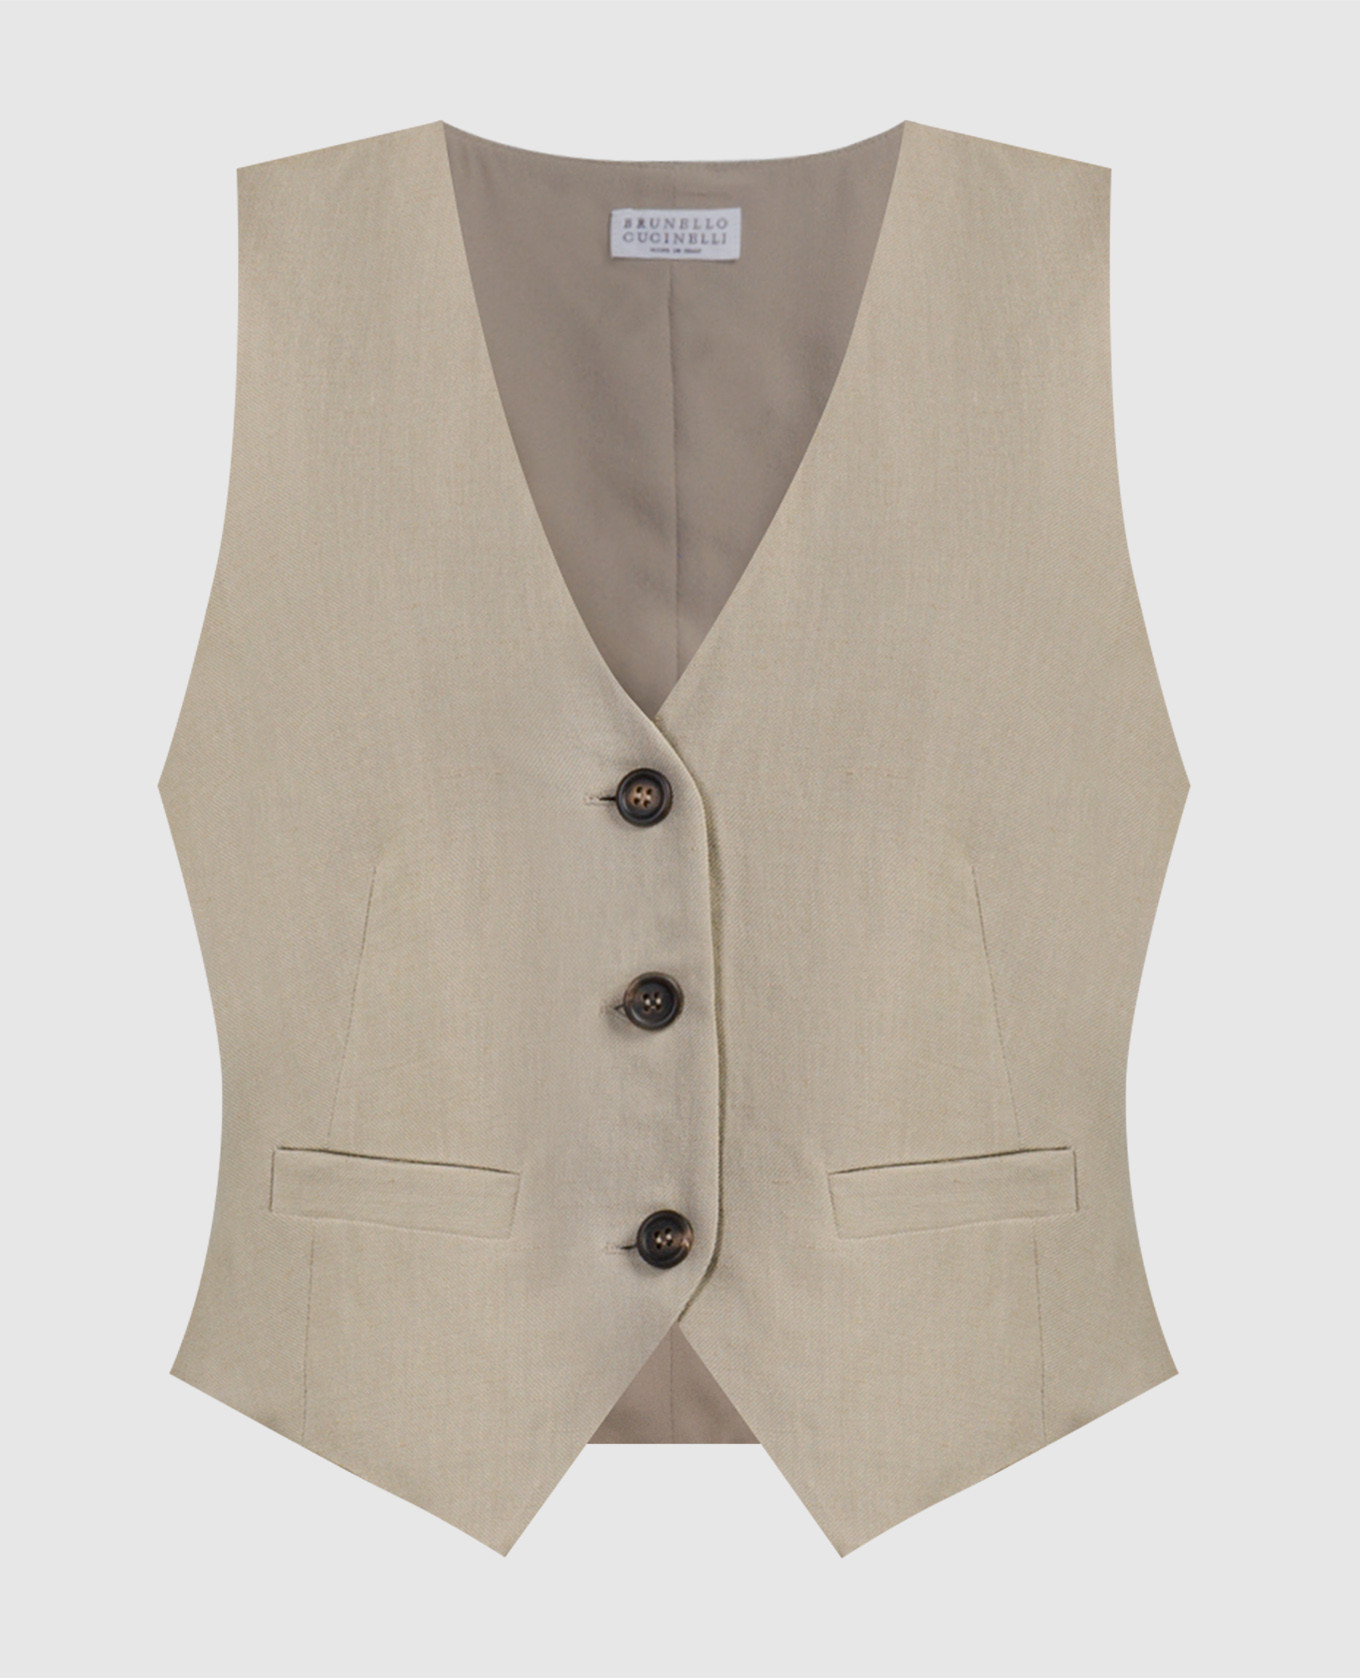 Brown linen waistcoat with monil chain